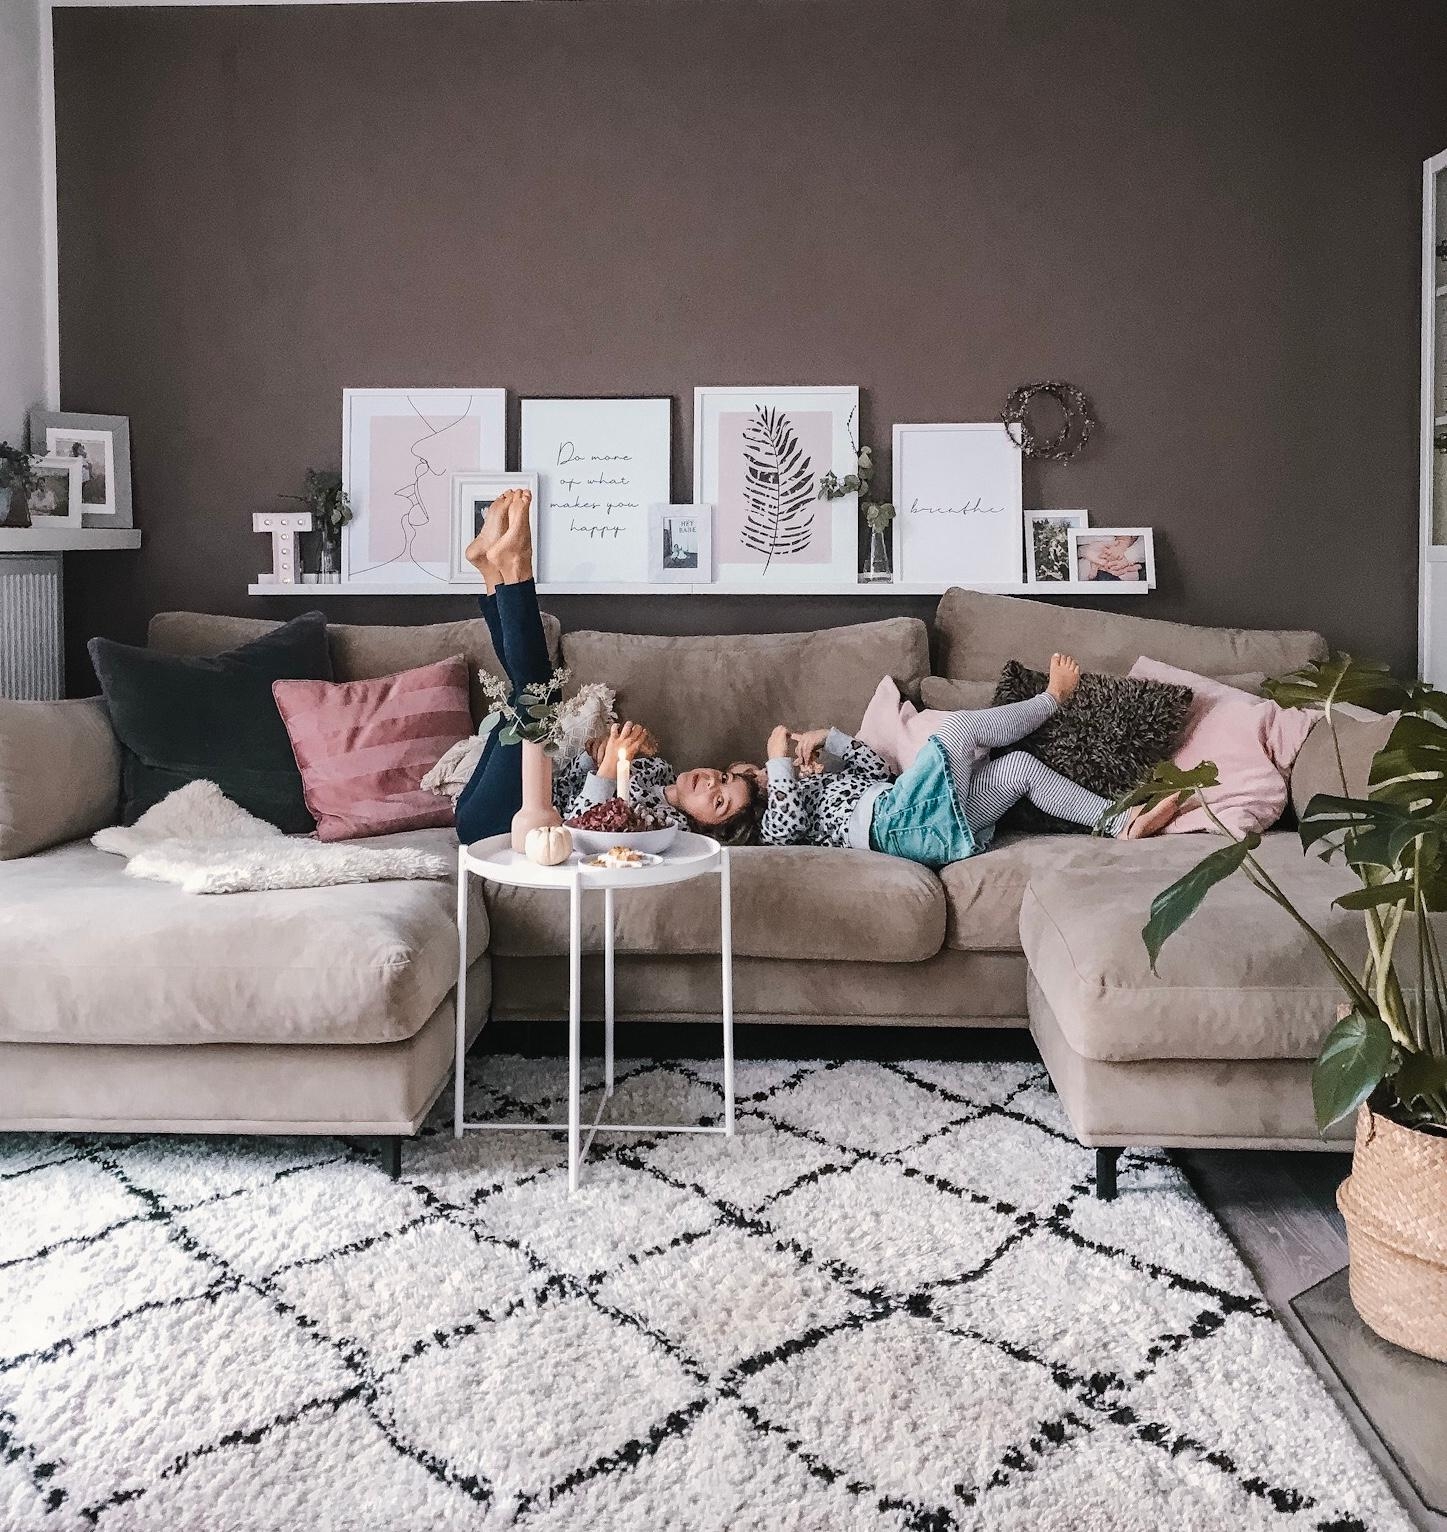 Sonntags auf dem Sofa 🧡 #lazysunday #sofa #couch #livingroom #wohnzimmer #wandfarbe